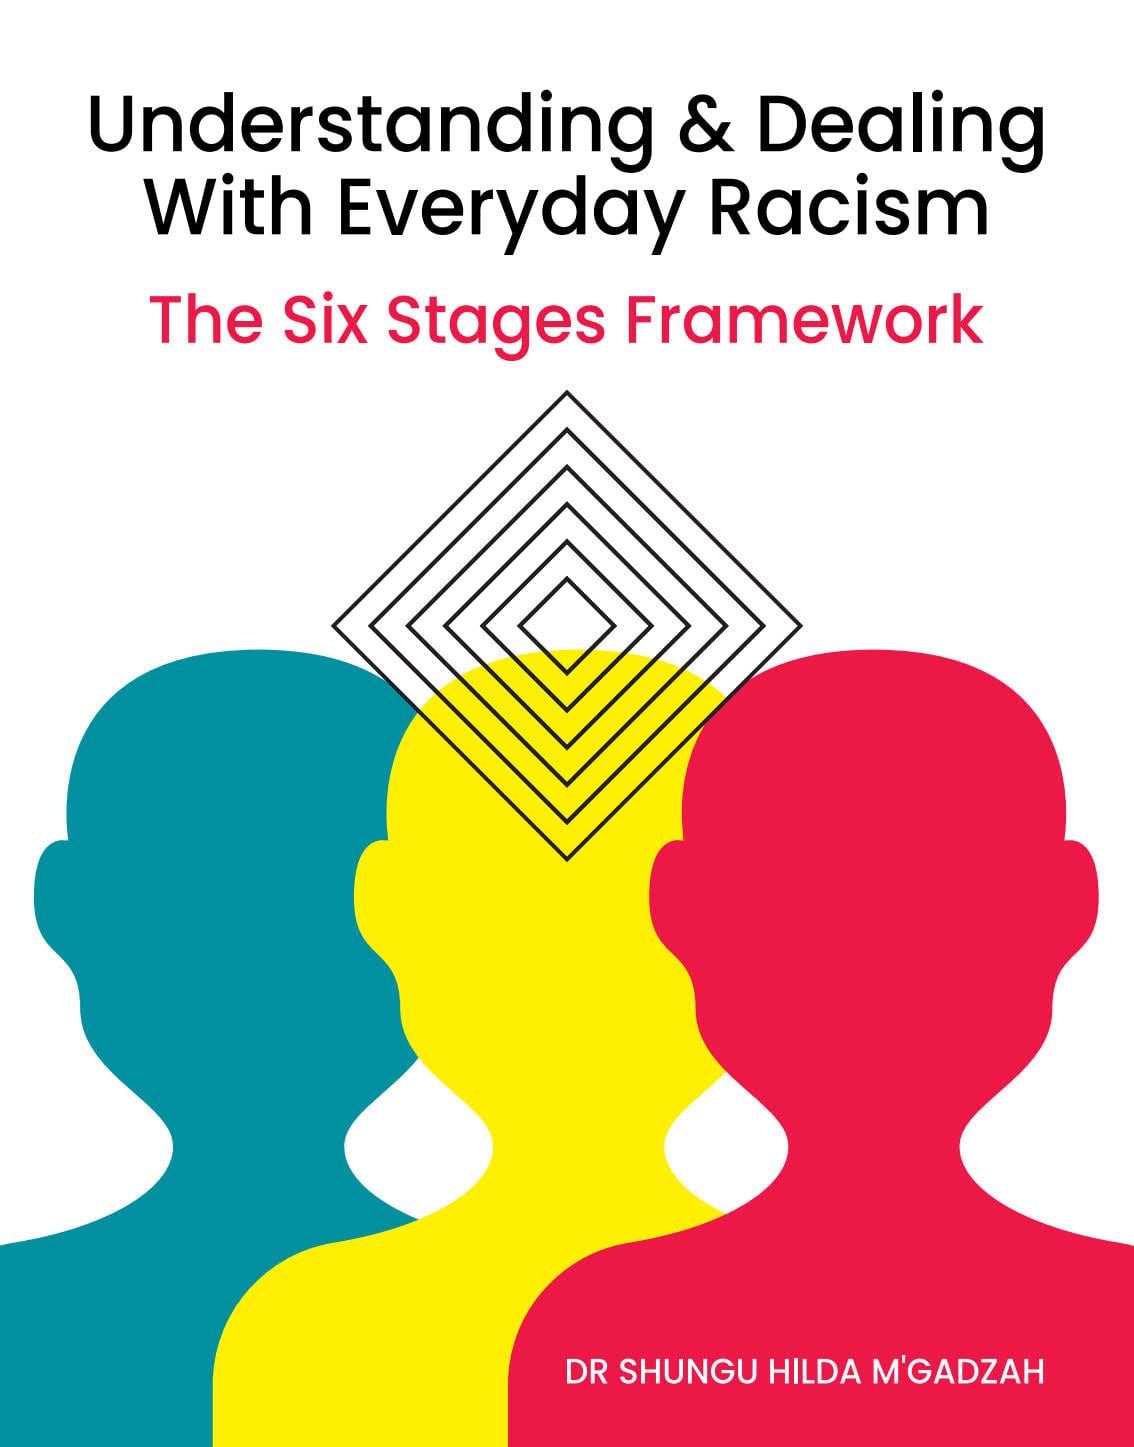 Six Stages Diversity Framework